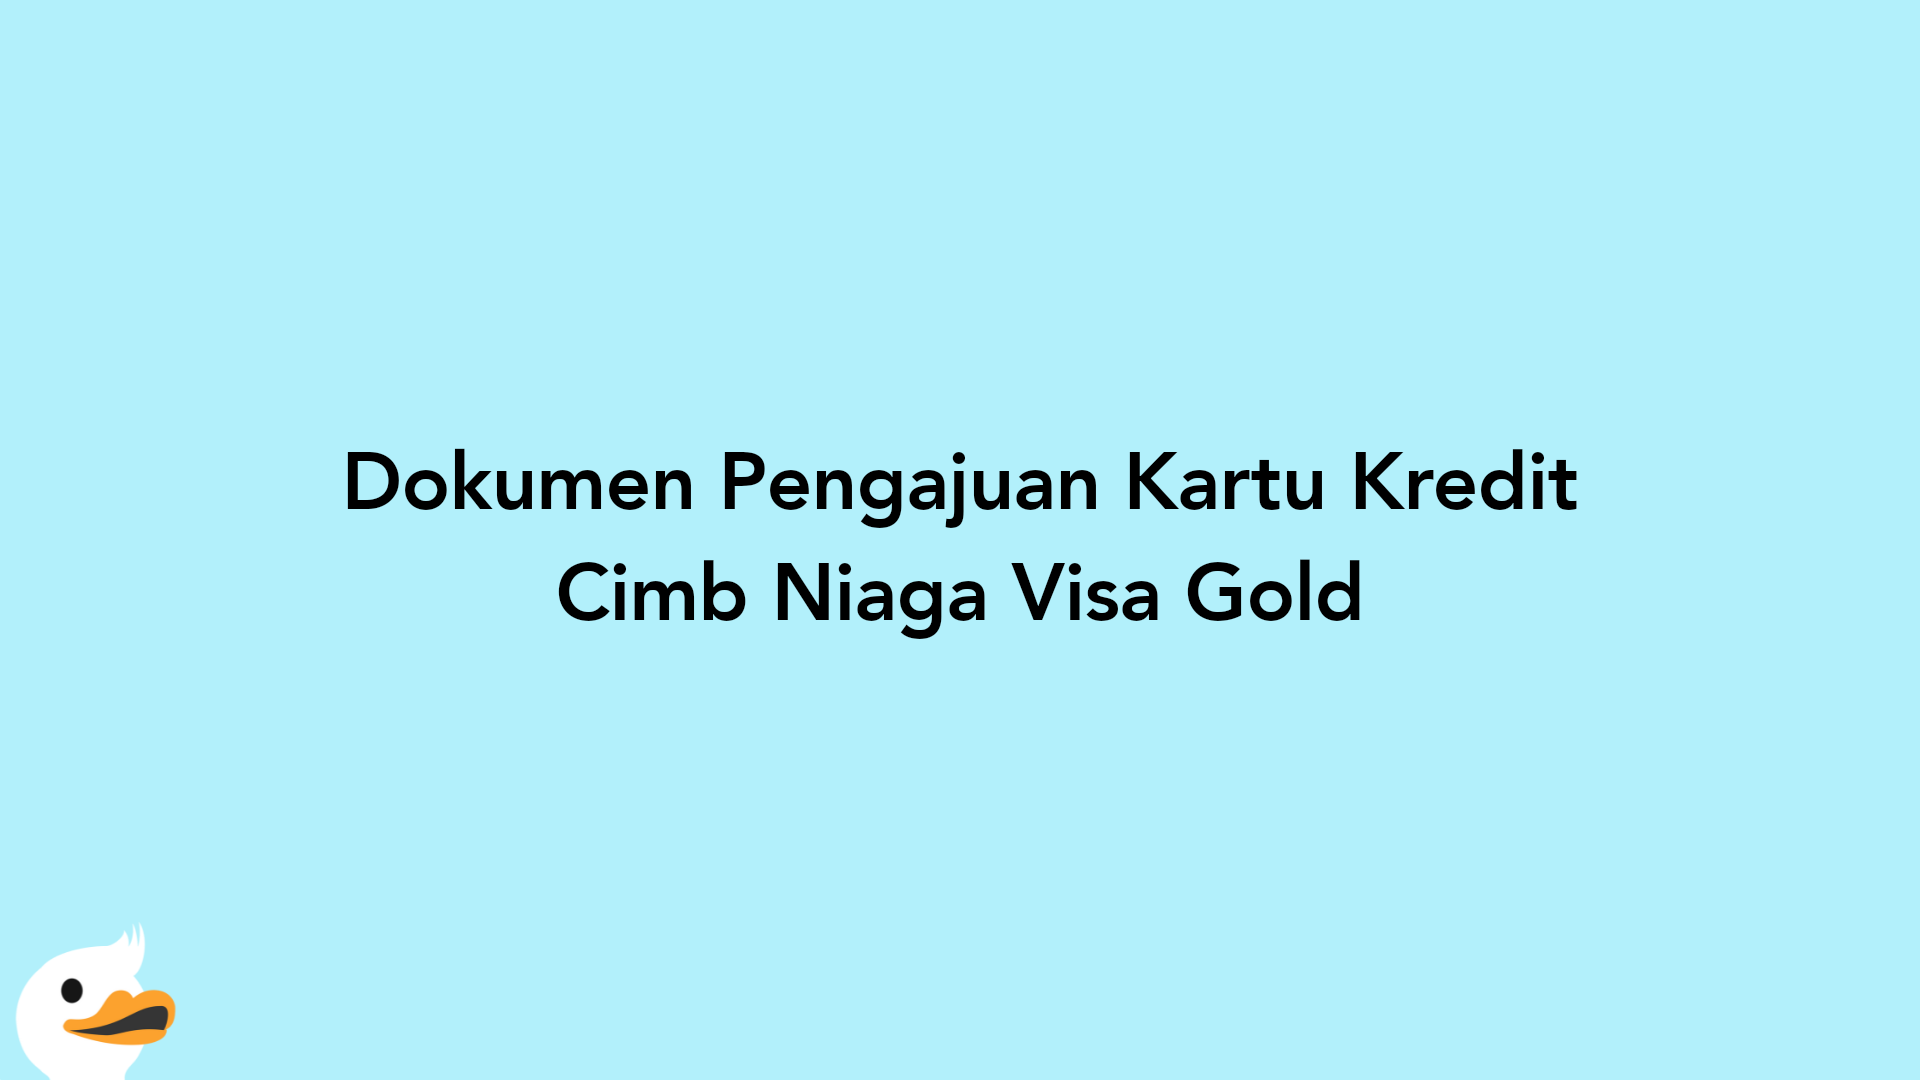 Dokumen Pengajuan Kartu Kredit Cimb Niaga Visa Gold